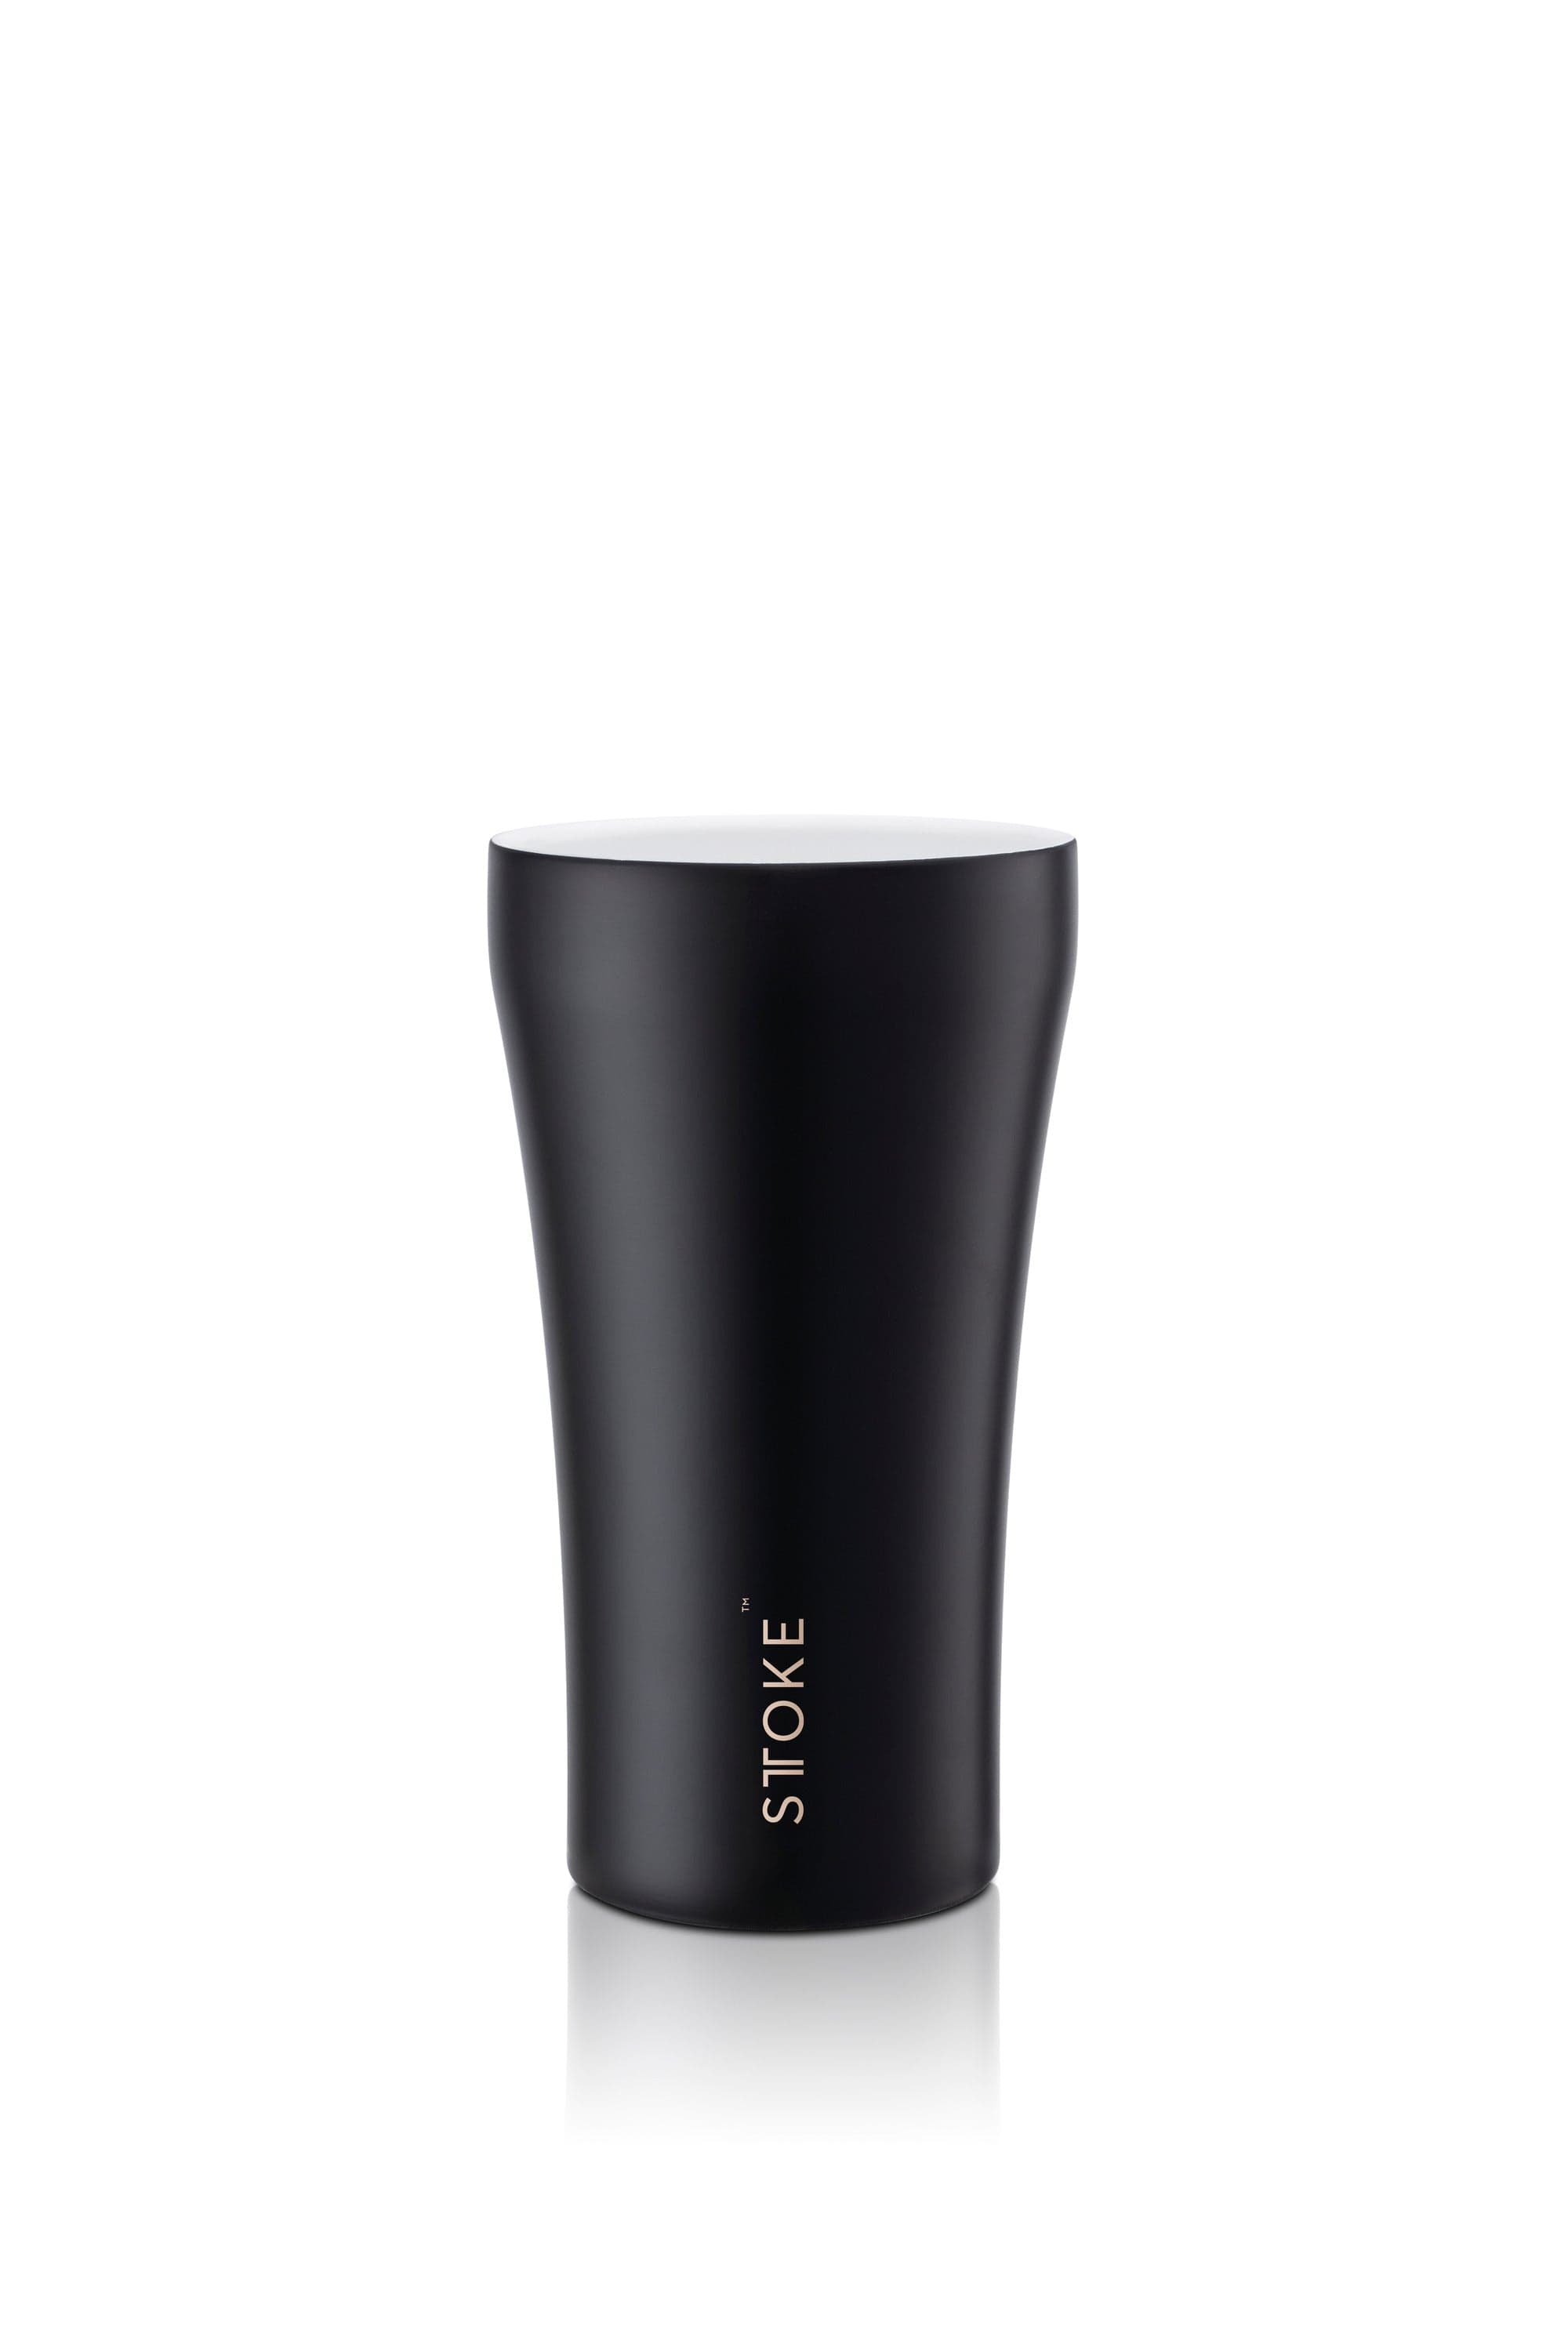 Sttoke Coffee & Tea Cups 12oz / Luxe Black Sttoke Leakproof - World's First Shatterproof Ceramic Cup